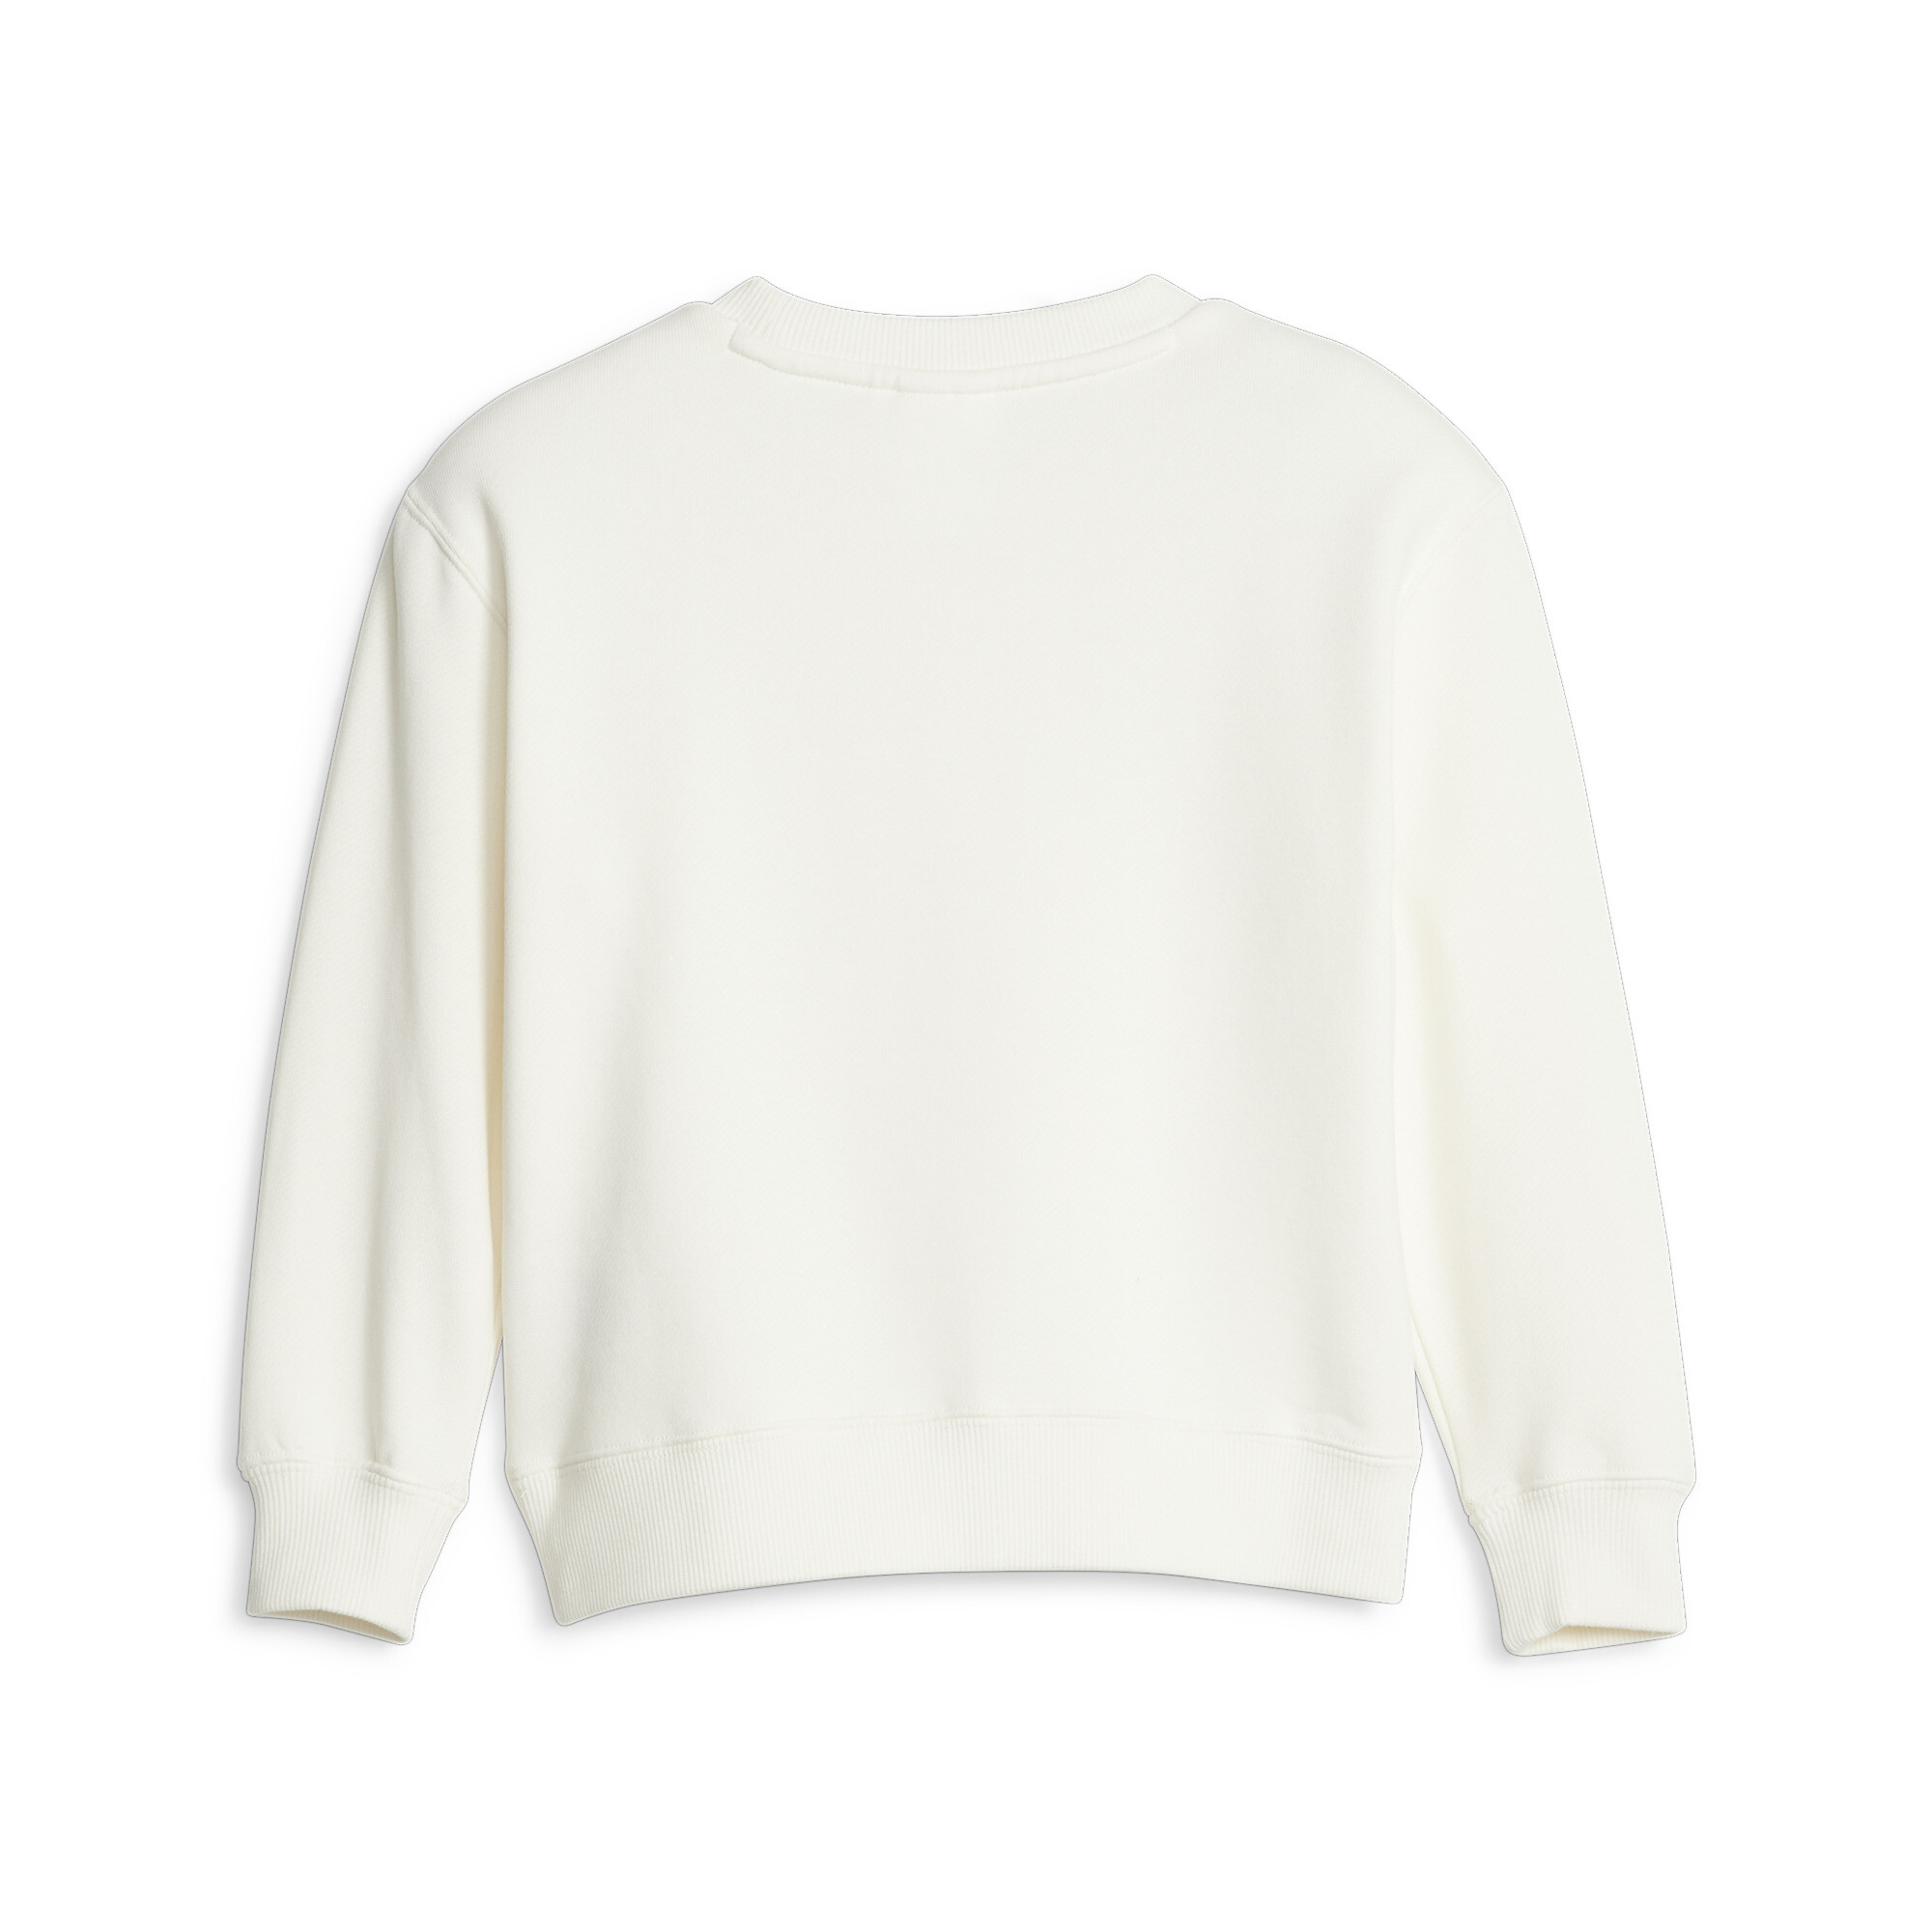 Puma X LIBERTY Kids' Sweatshirt, White, Size 9-10Y, Clothing